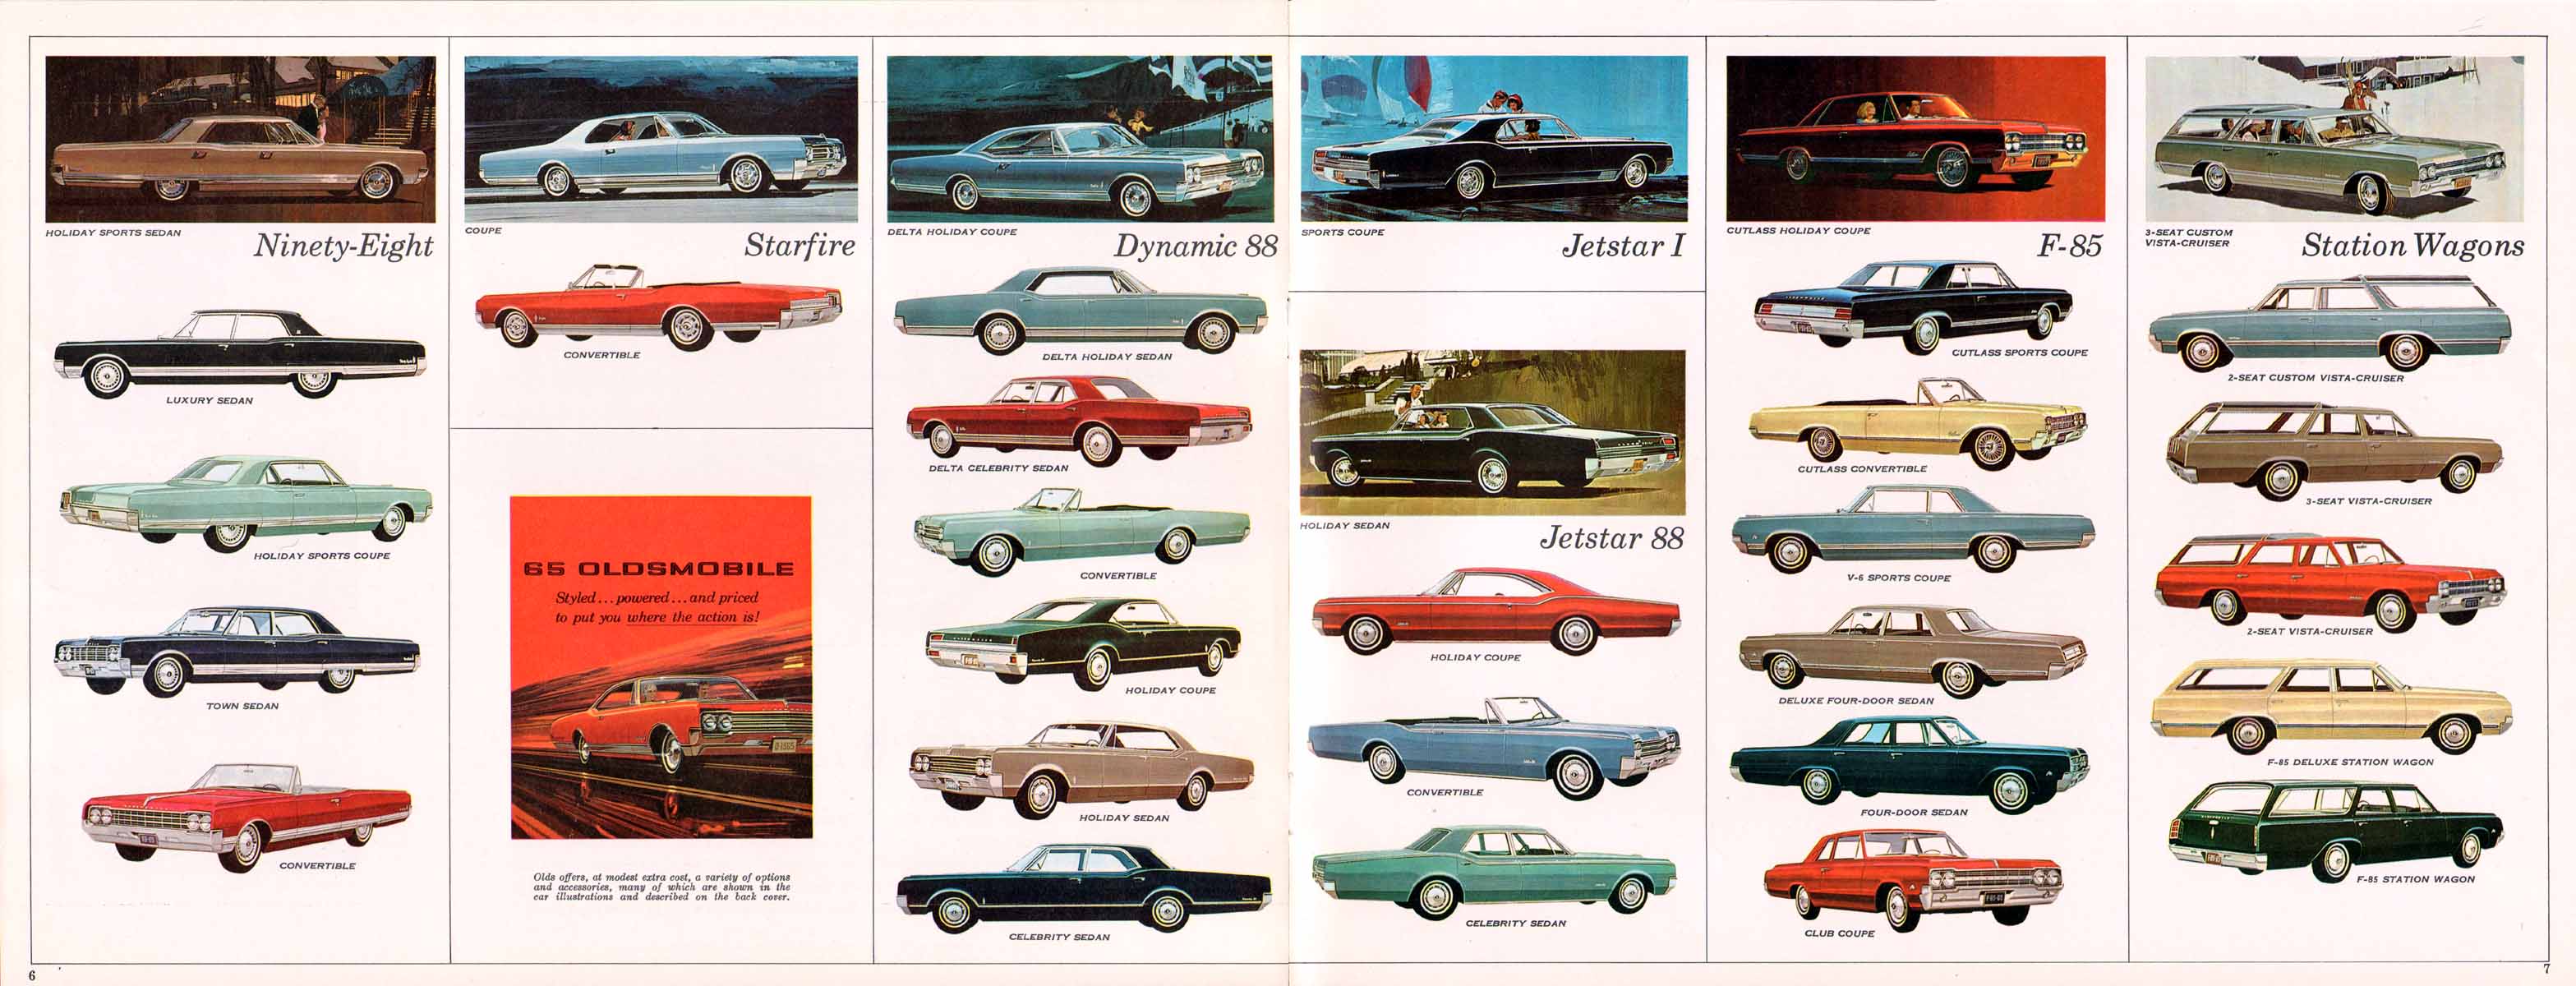 1965_Oldsmobile_Wagons-06-07